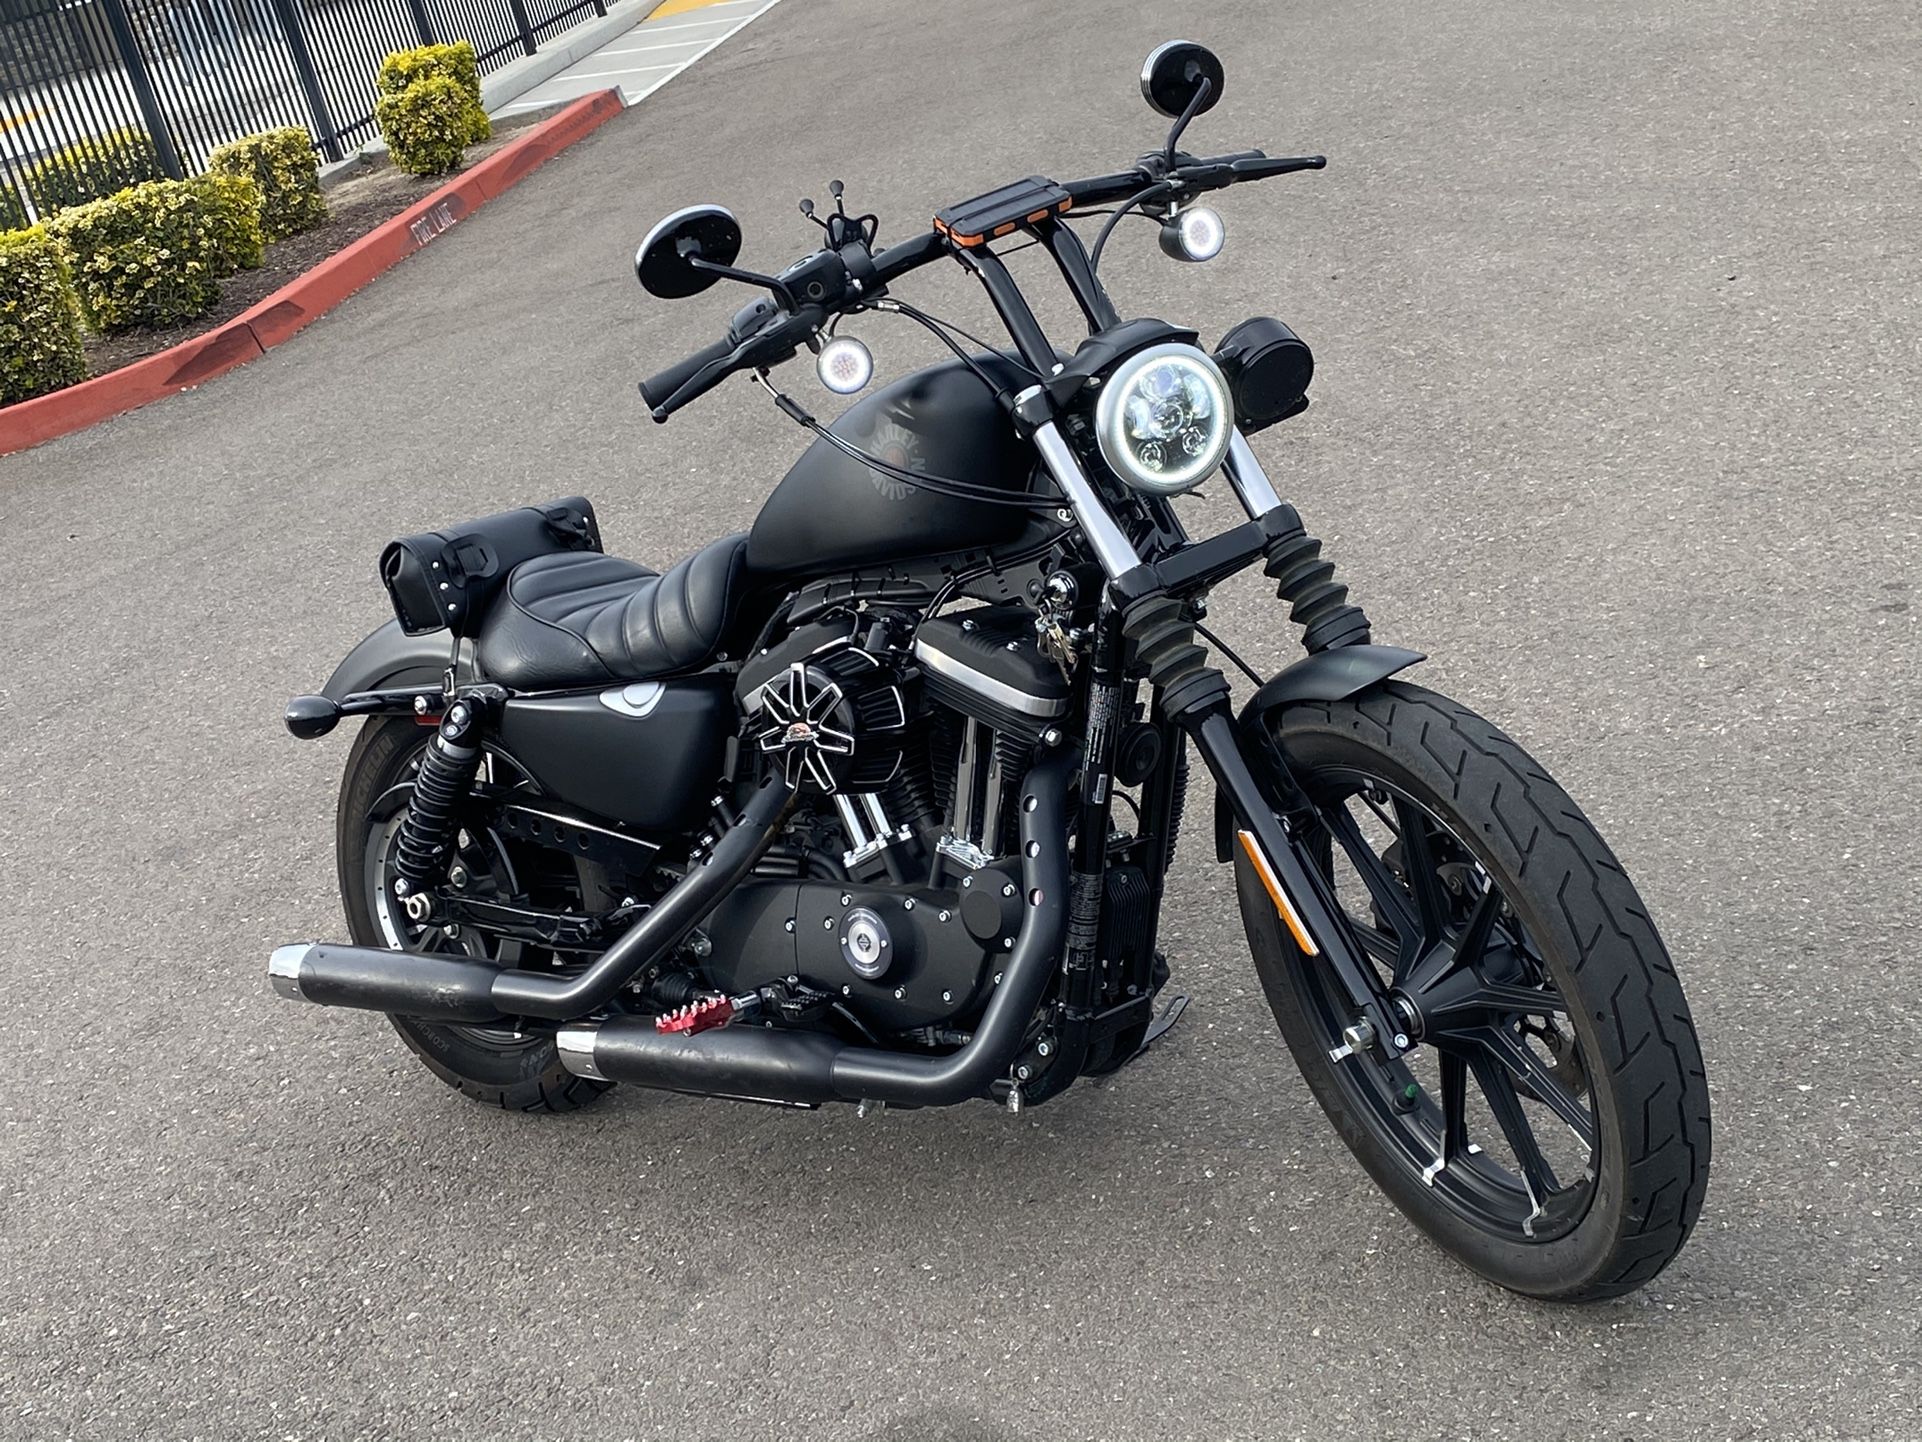 2019 Harley Davidson iron